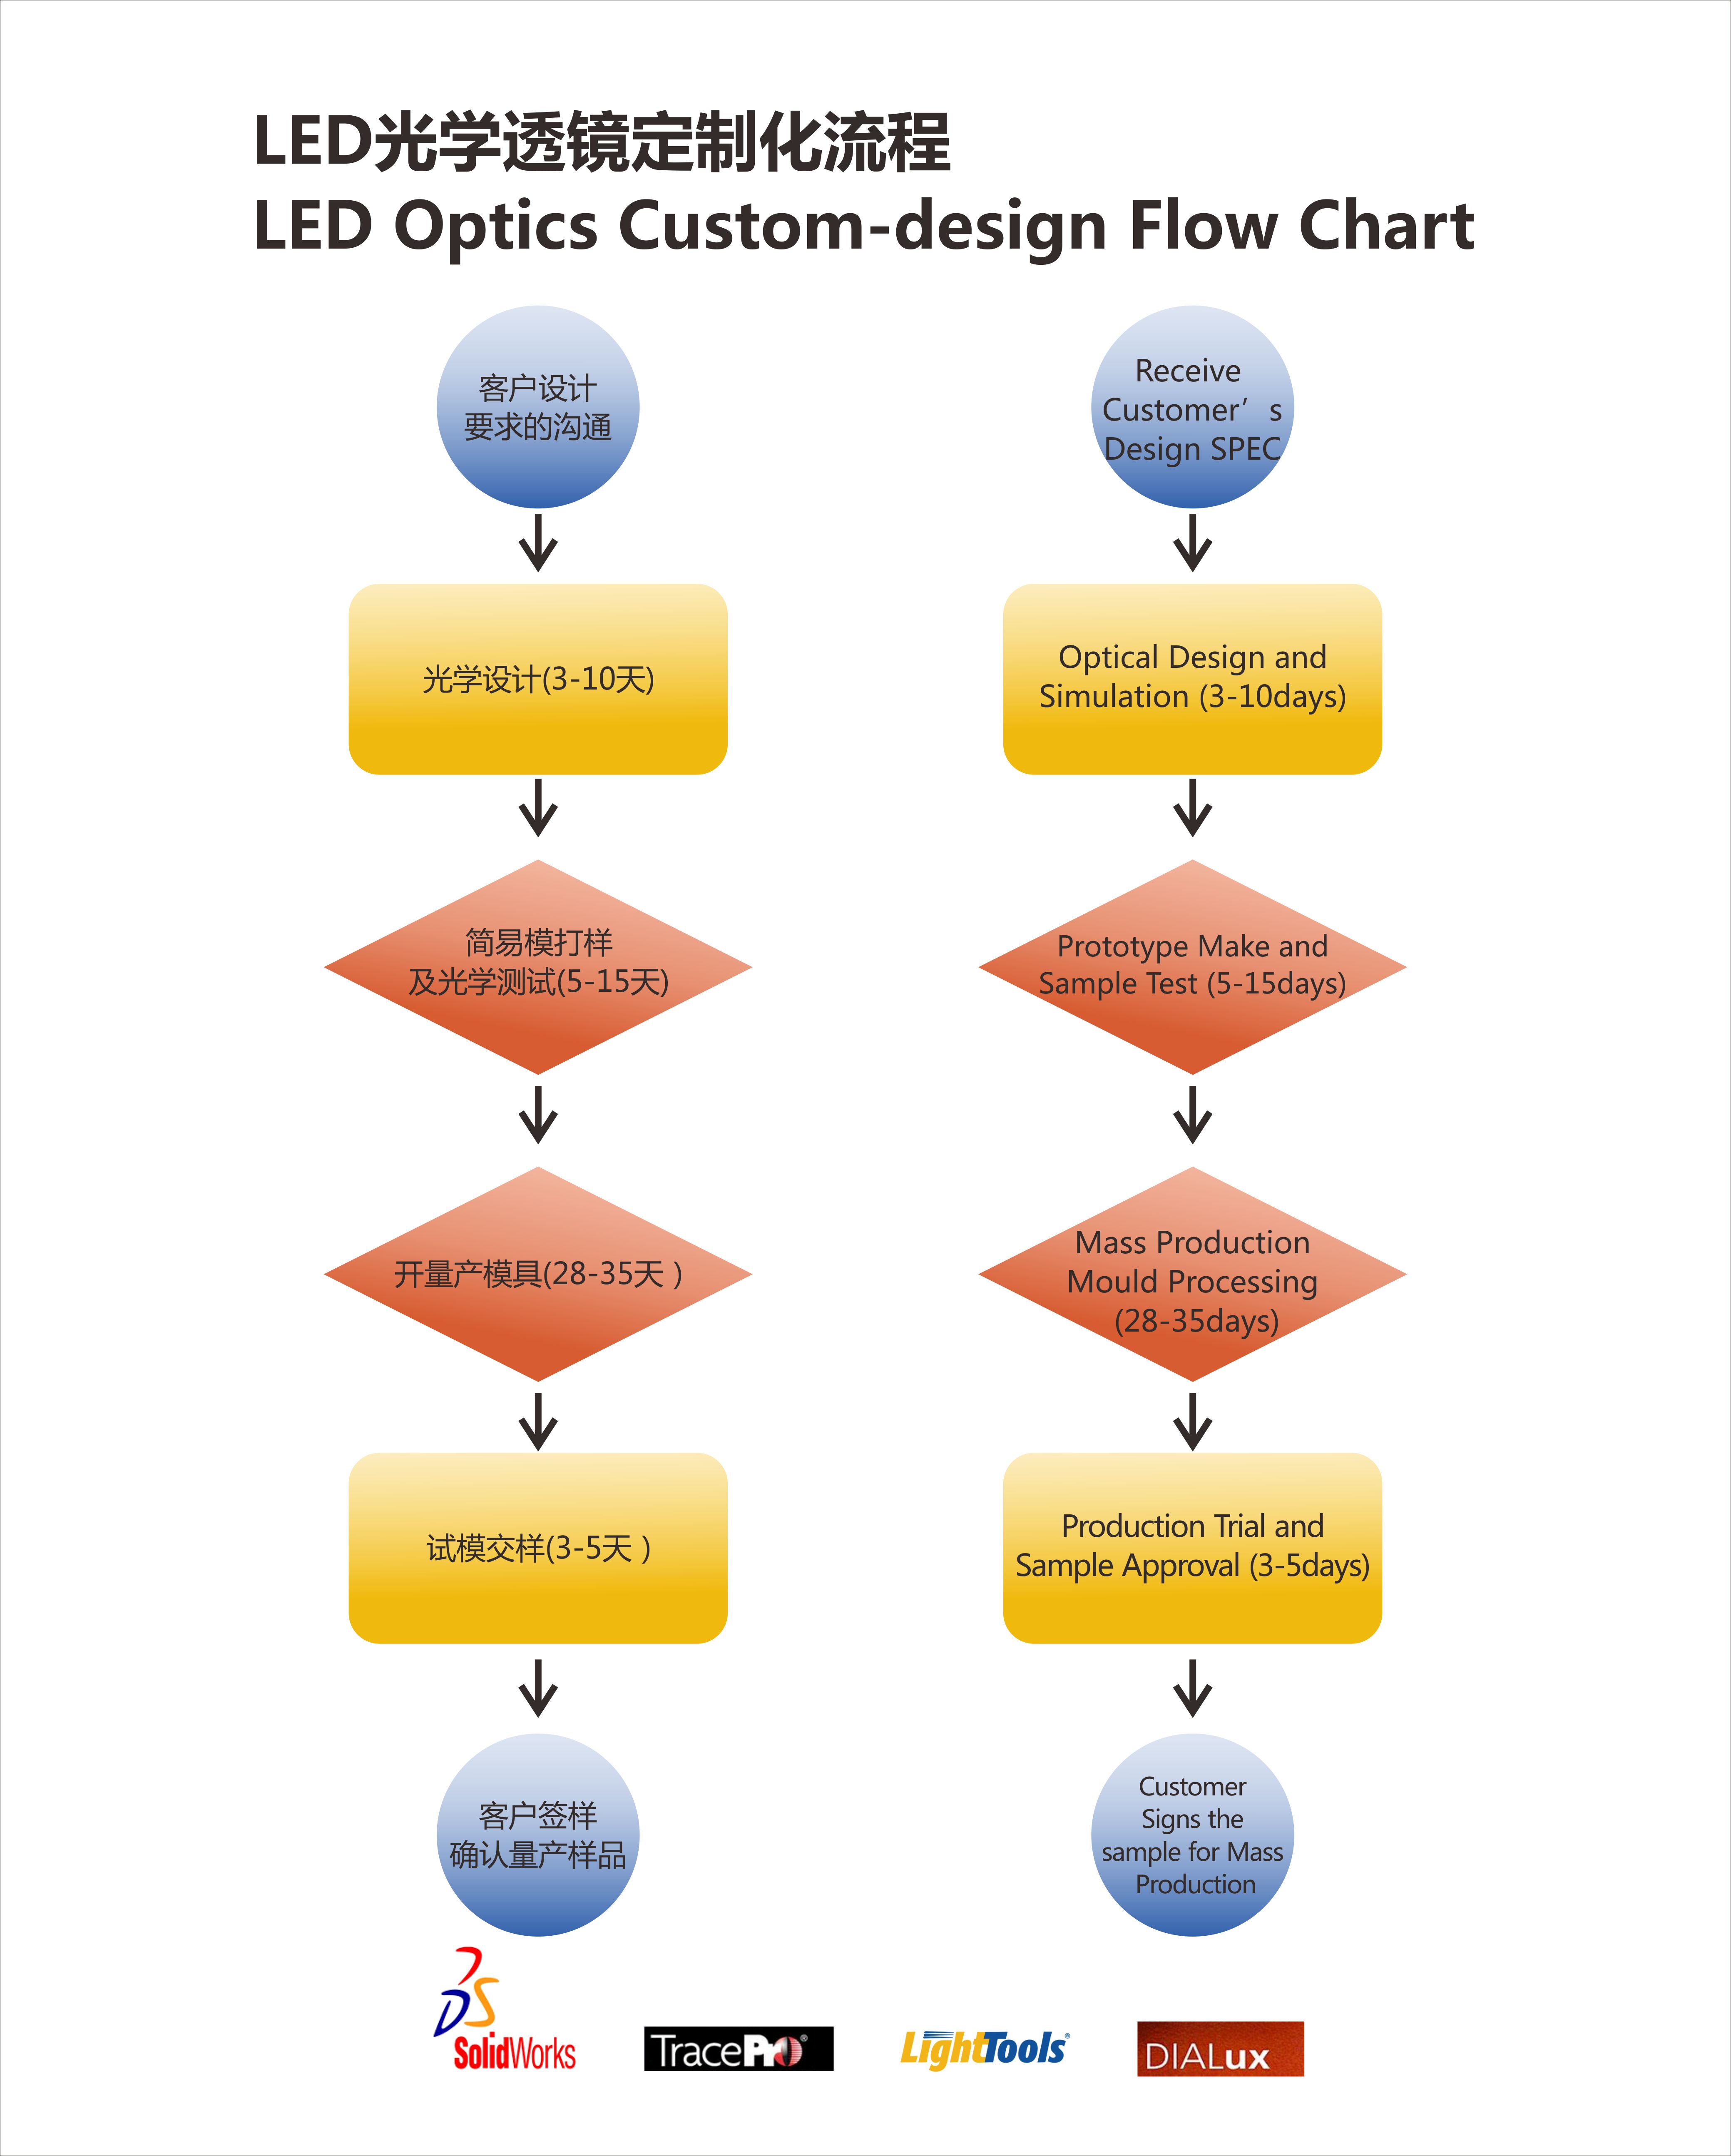 LED optical lens costom desgin flow chart 